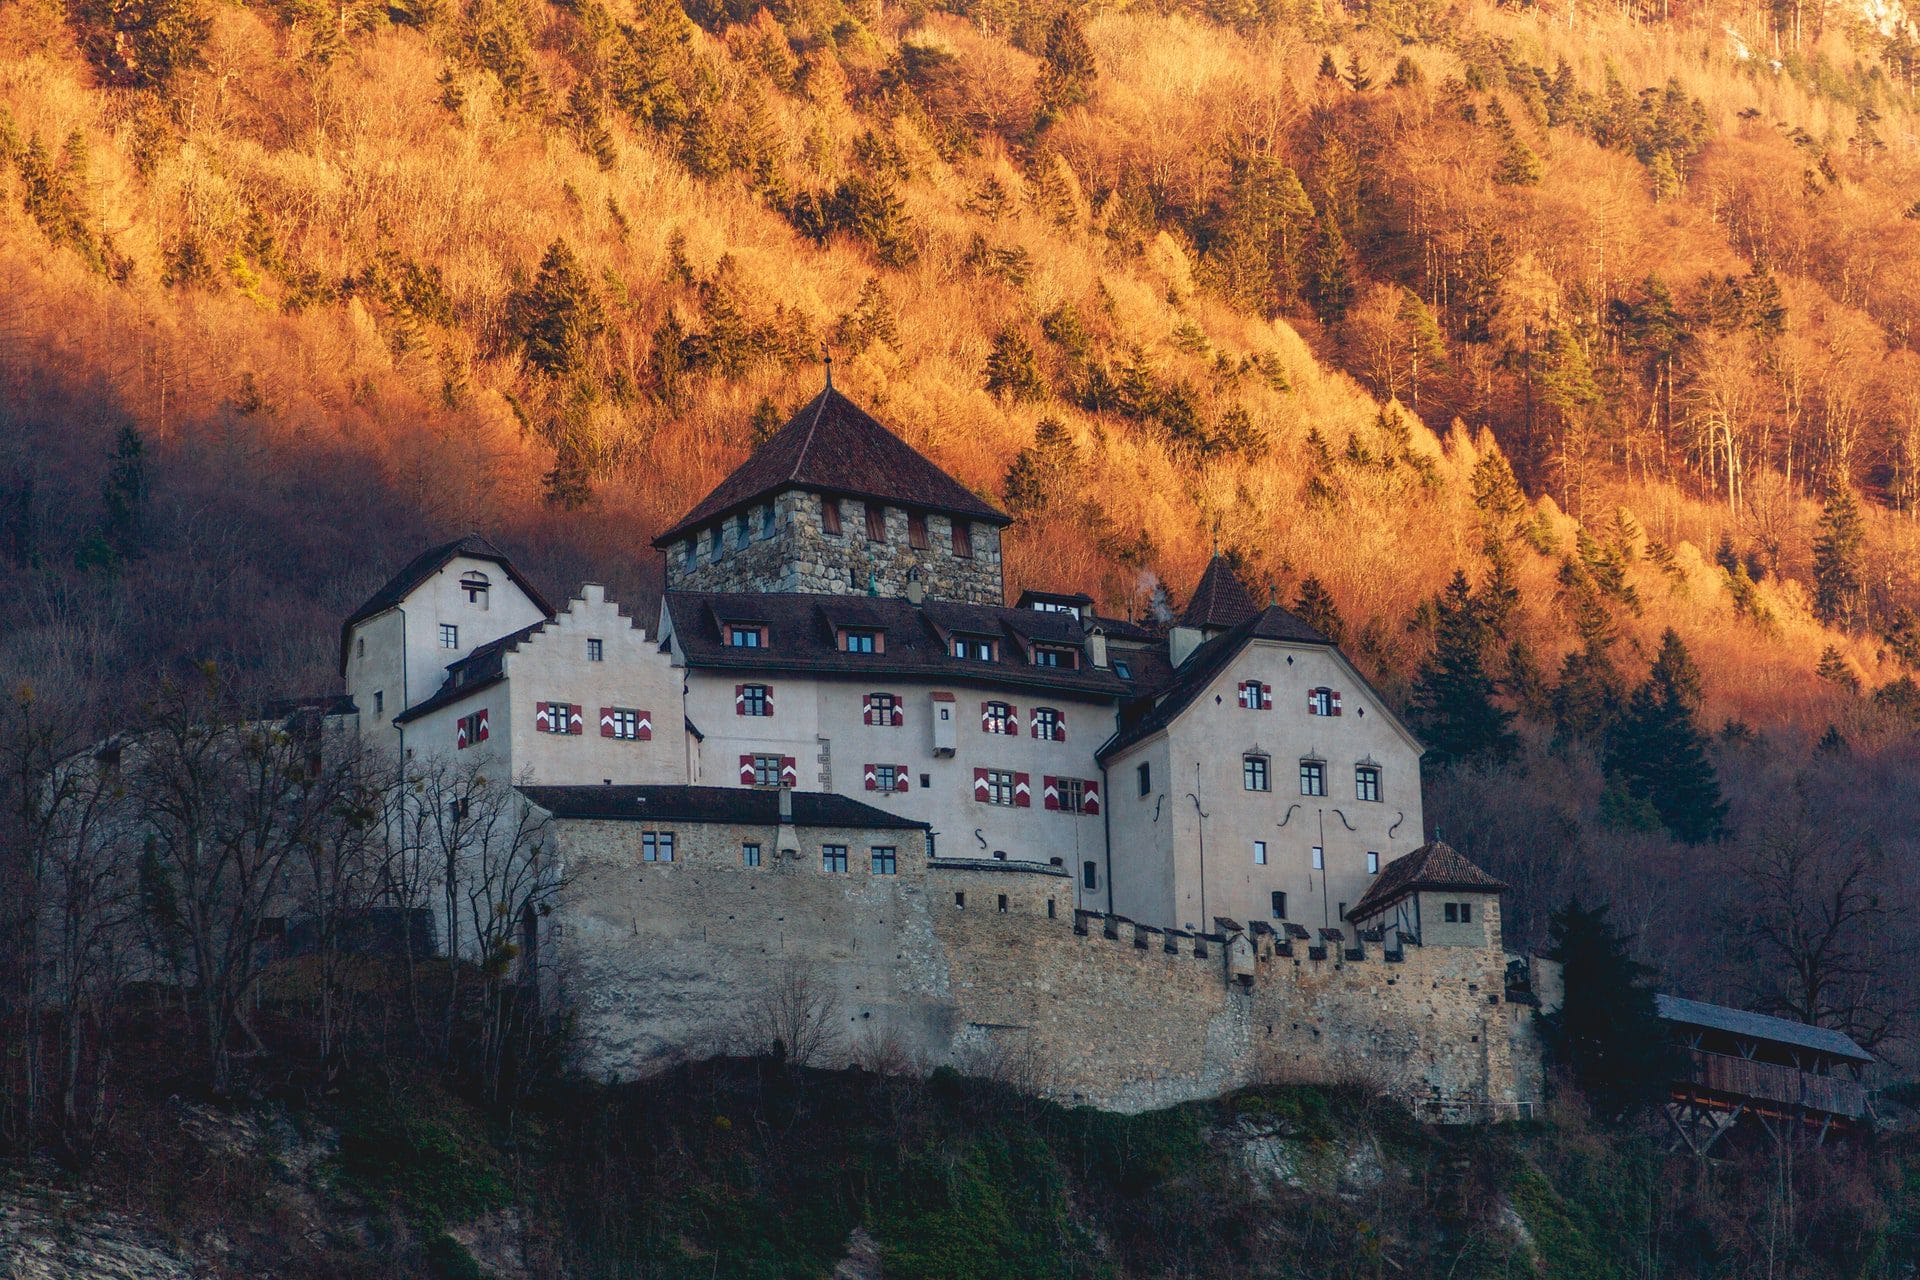 Sortir des sentiers battus, découvrez le Liechtenstein